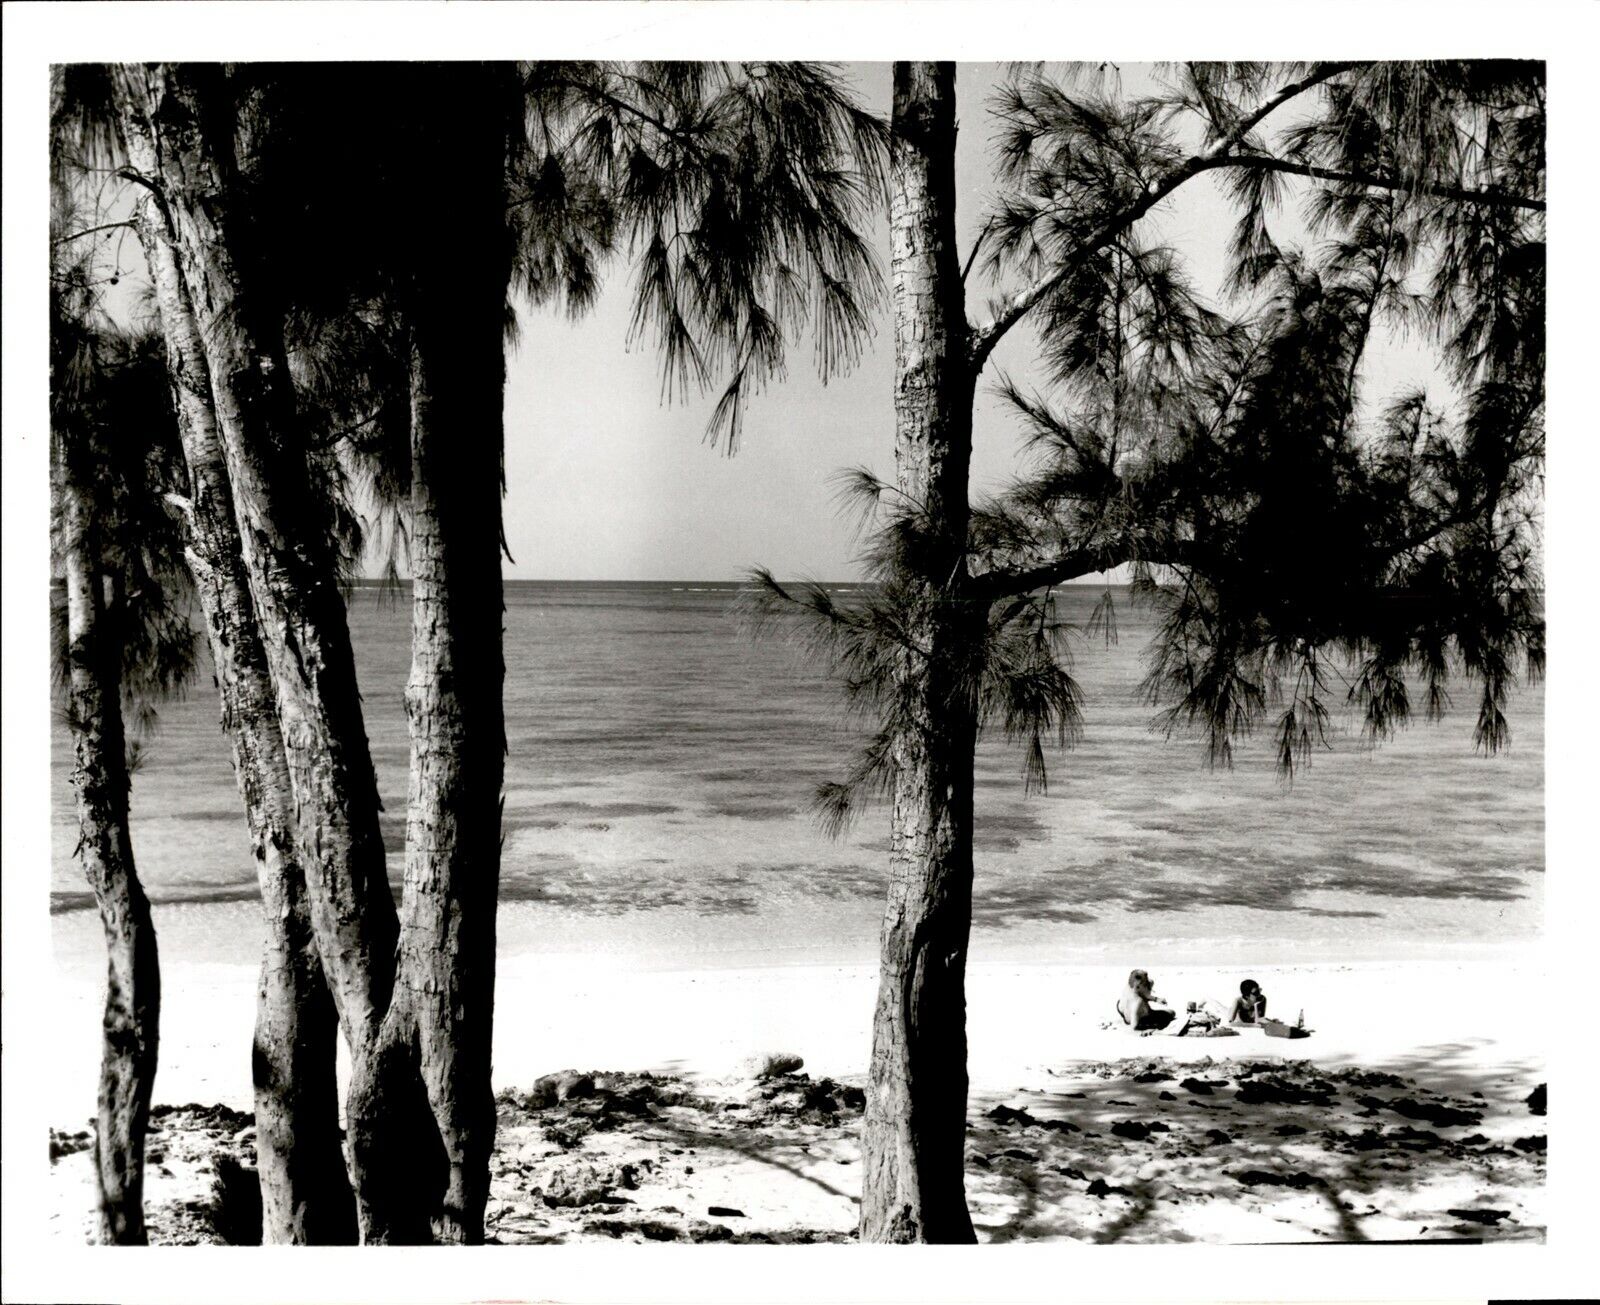 LG925 Orig Photo EXUMA BAHAMAS Beautiful Tropical Island Dream Vacation Beach